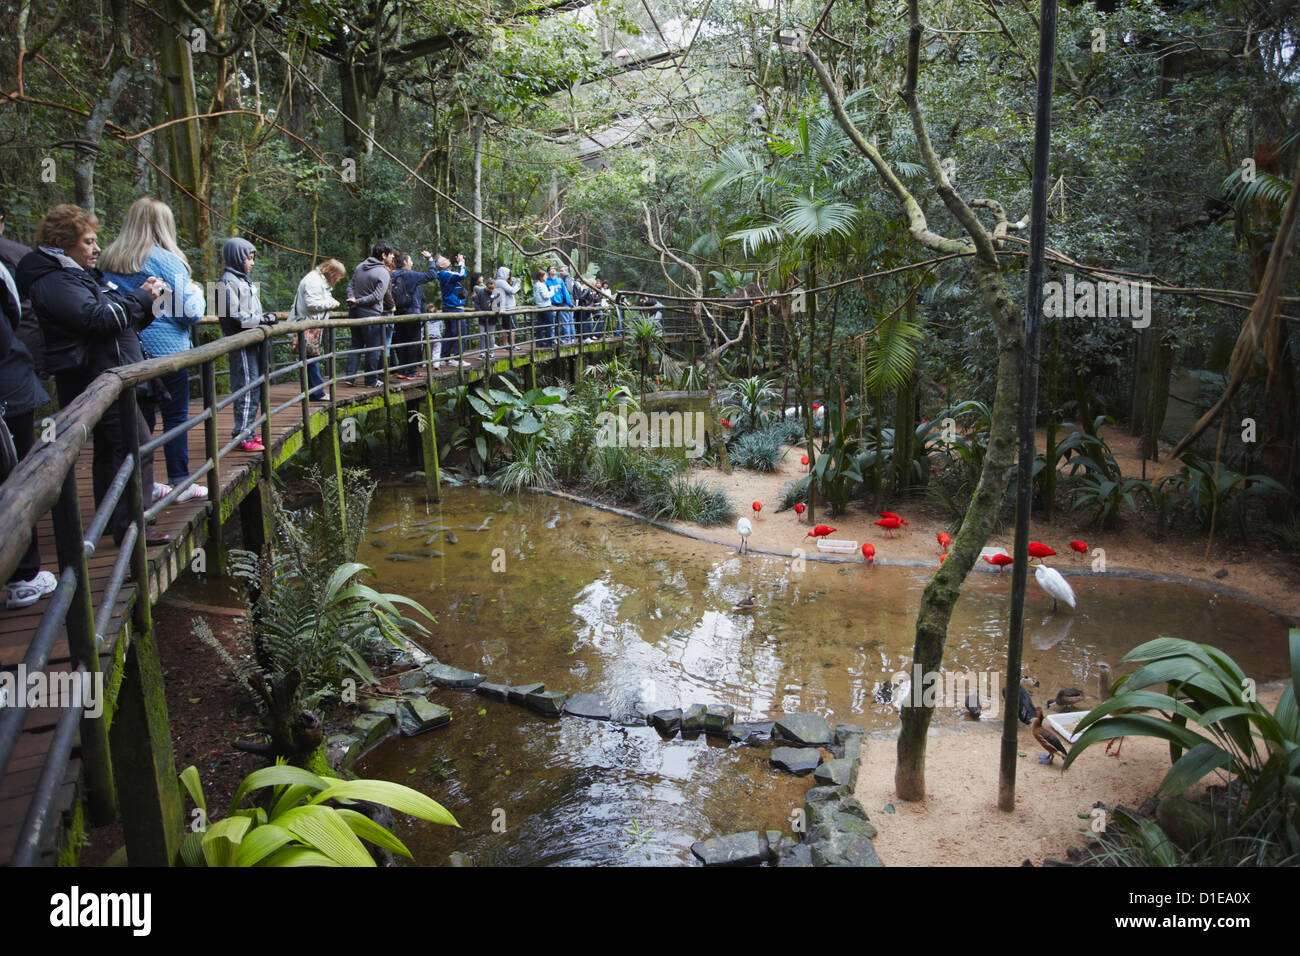 People inside walk-in enclosure at Parque das Aves (Bird Park), Iguacu, Parana, Brazil, South America Stock Photo